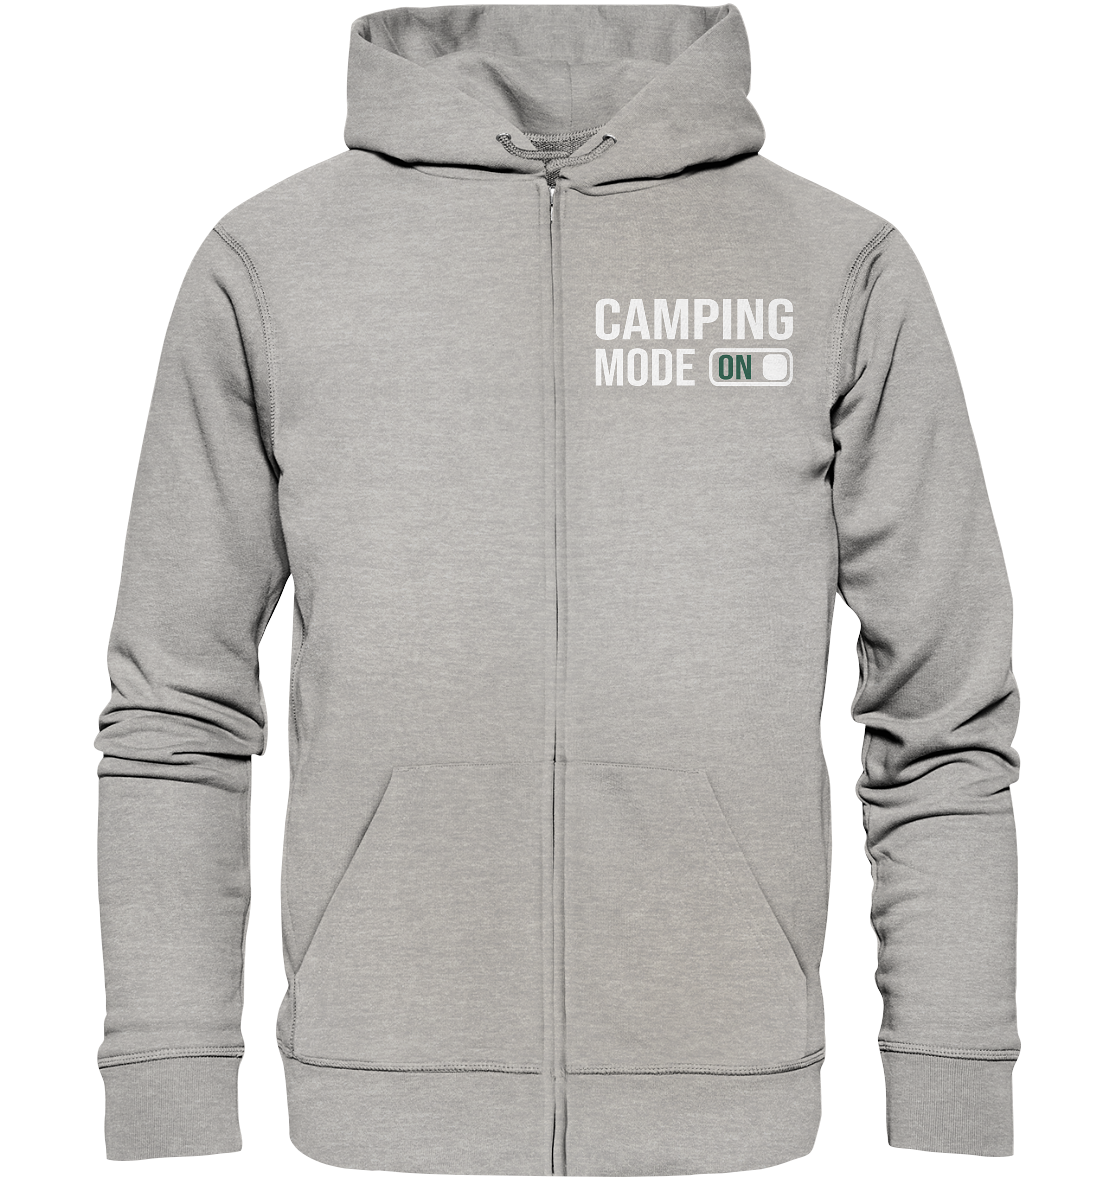 Camping Mode On - Organic Zipper